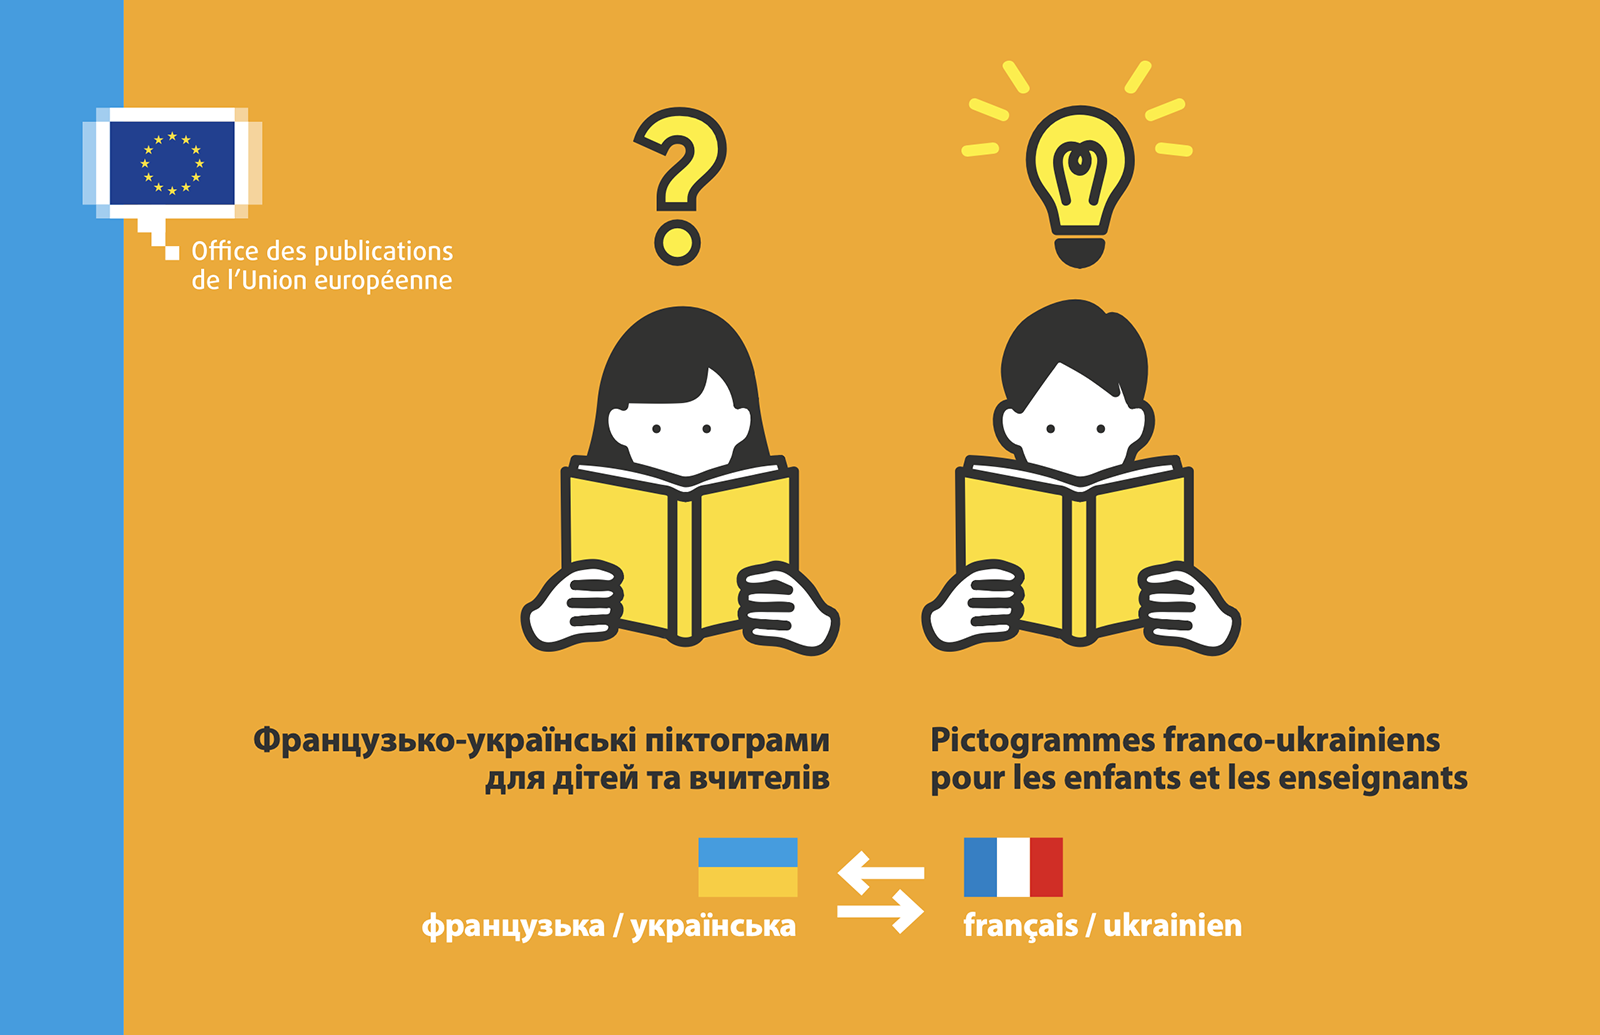 Pictogrammes franco-ukrainiens pour les enfants et les enseignants | Французько-українські піктограми для дітей та вчителів